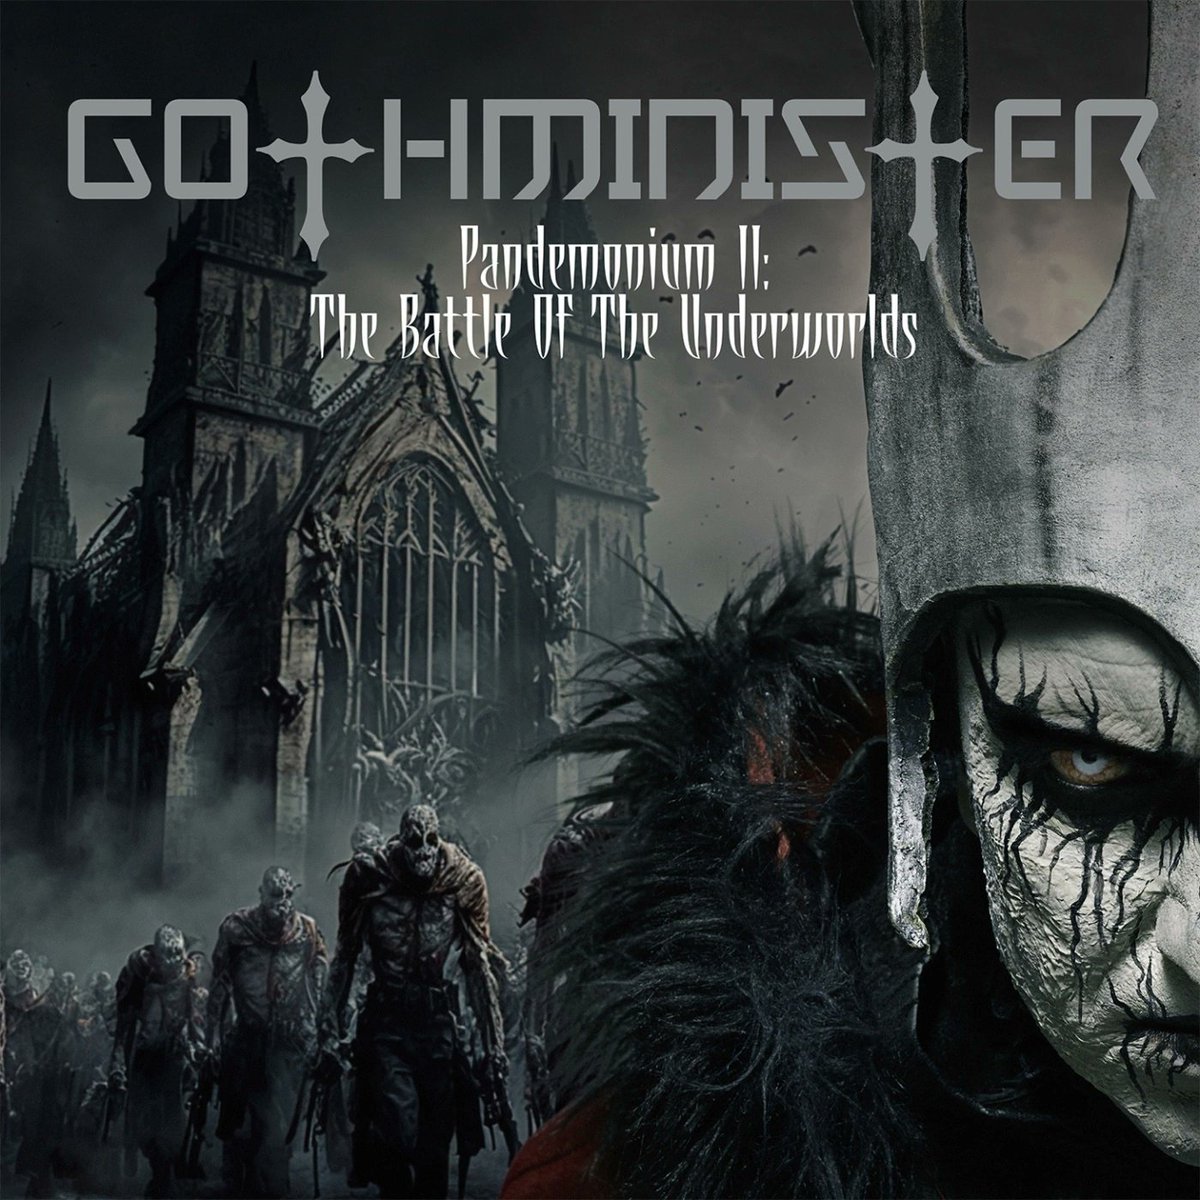 Gothminister - Pandemonium II: The Battle of the Underworlds (2024) 
Gothic Metal, Industrial Metal
Norway
#rocknewsreleases #rocknewsrelease #rocknews #rock #rnr #rn #gothicmetal #industrialmetal #gothminister 

@Gothminister